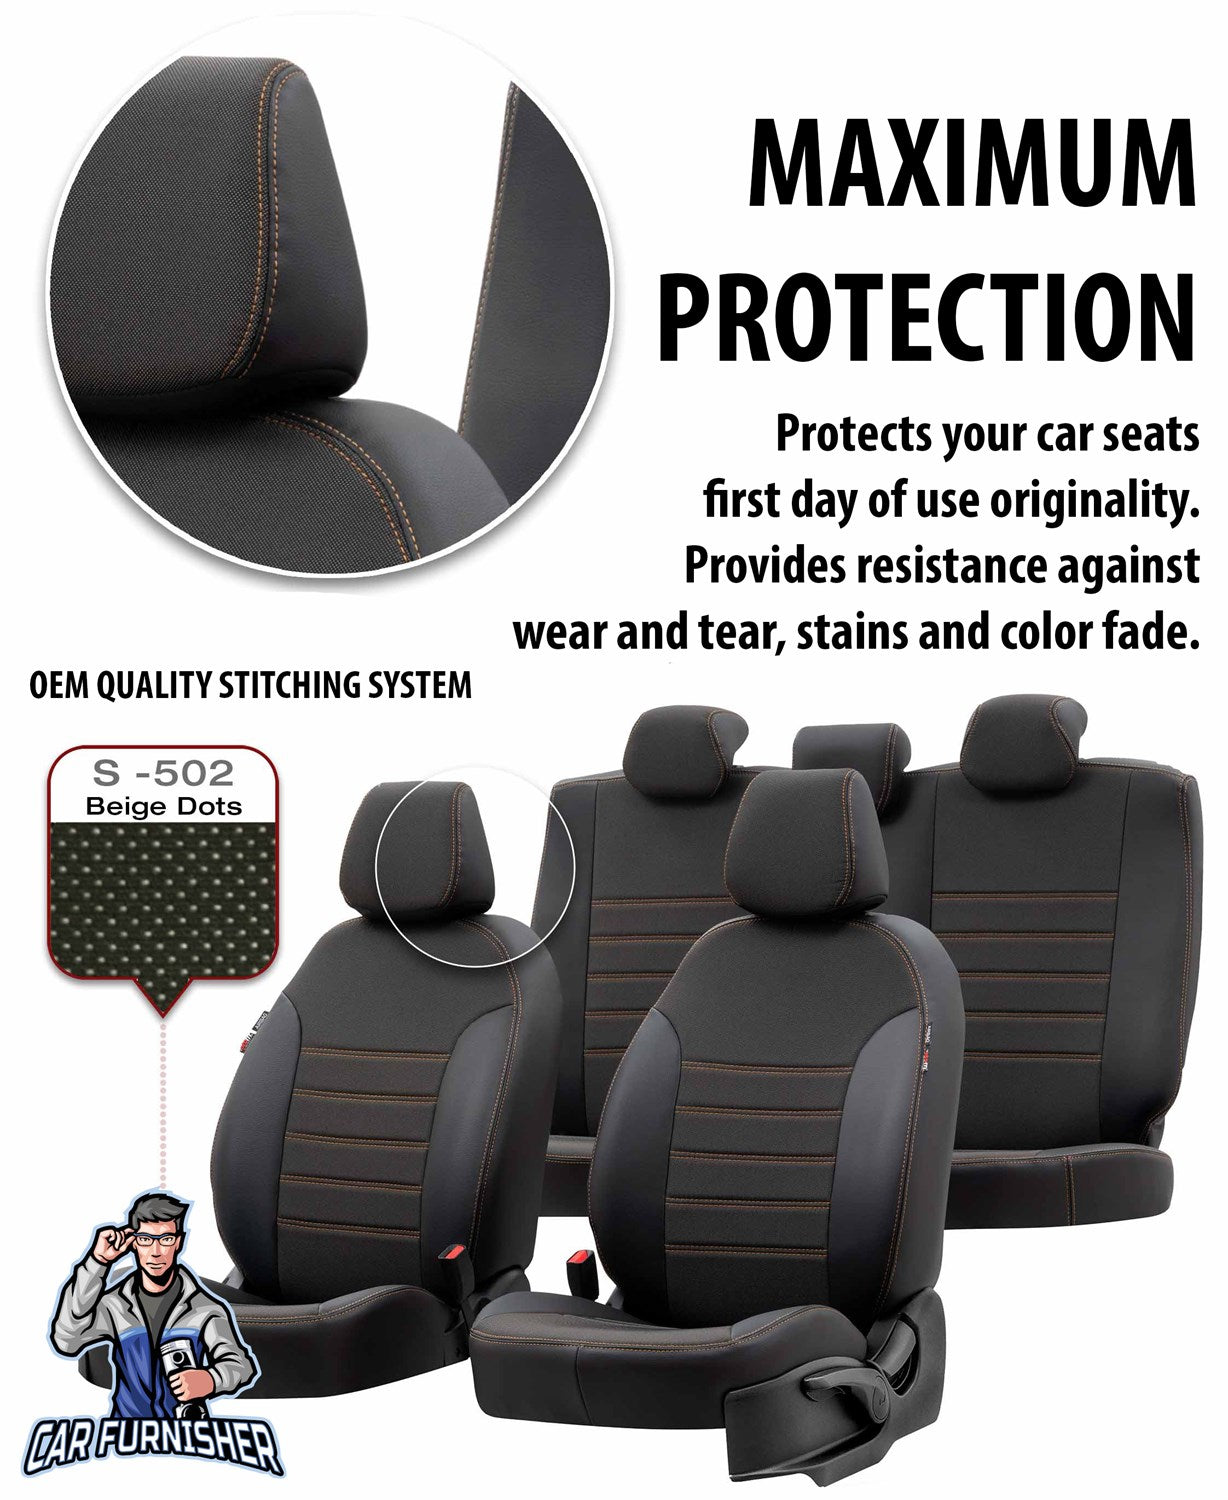 Seat Exeo Seat Covers Paris Leather & Jacquard Design Dark Beige Leather & Jacquard Fabric